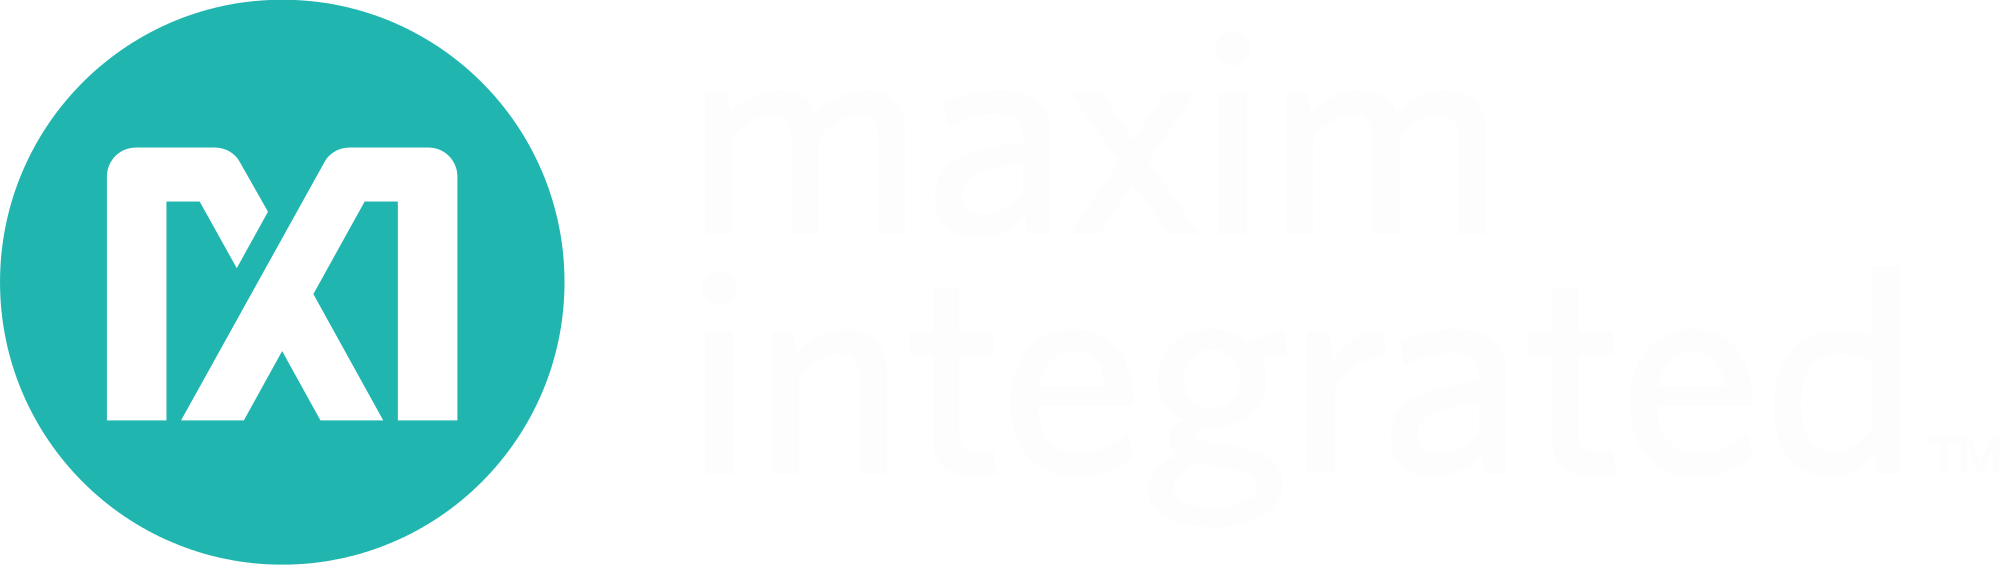 storybuilder dashboards maxim integrated logo